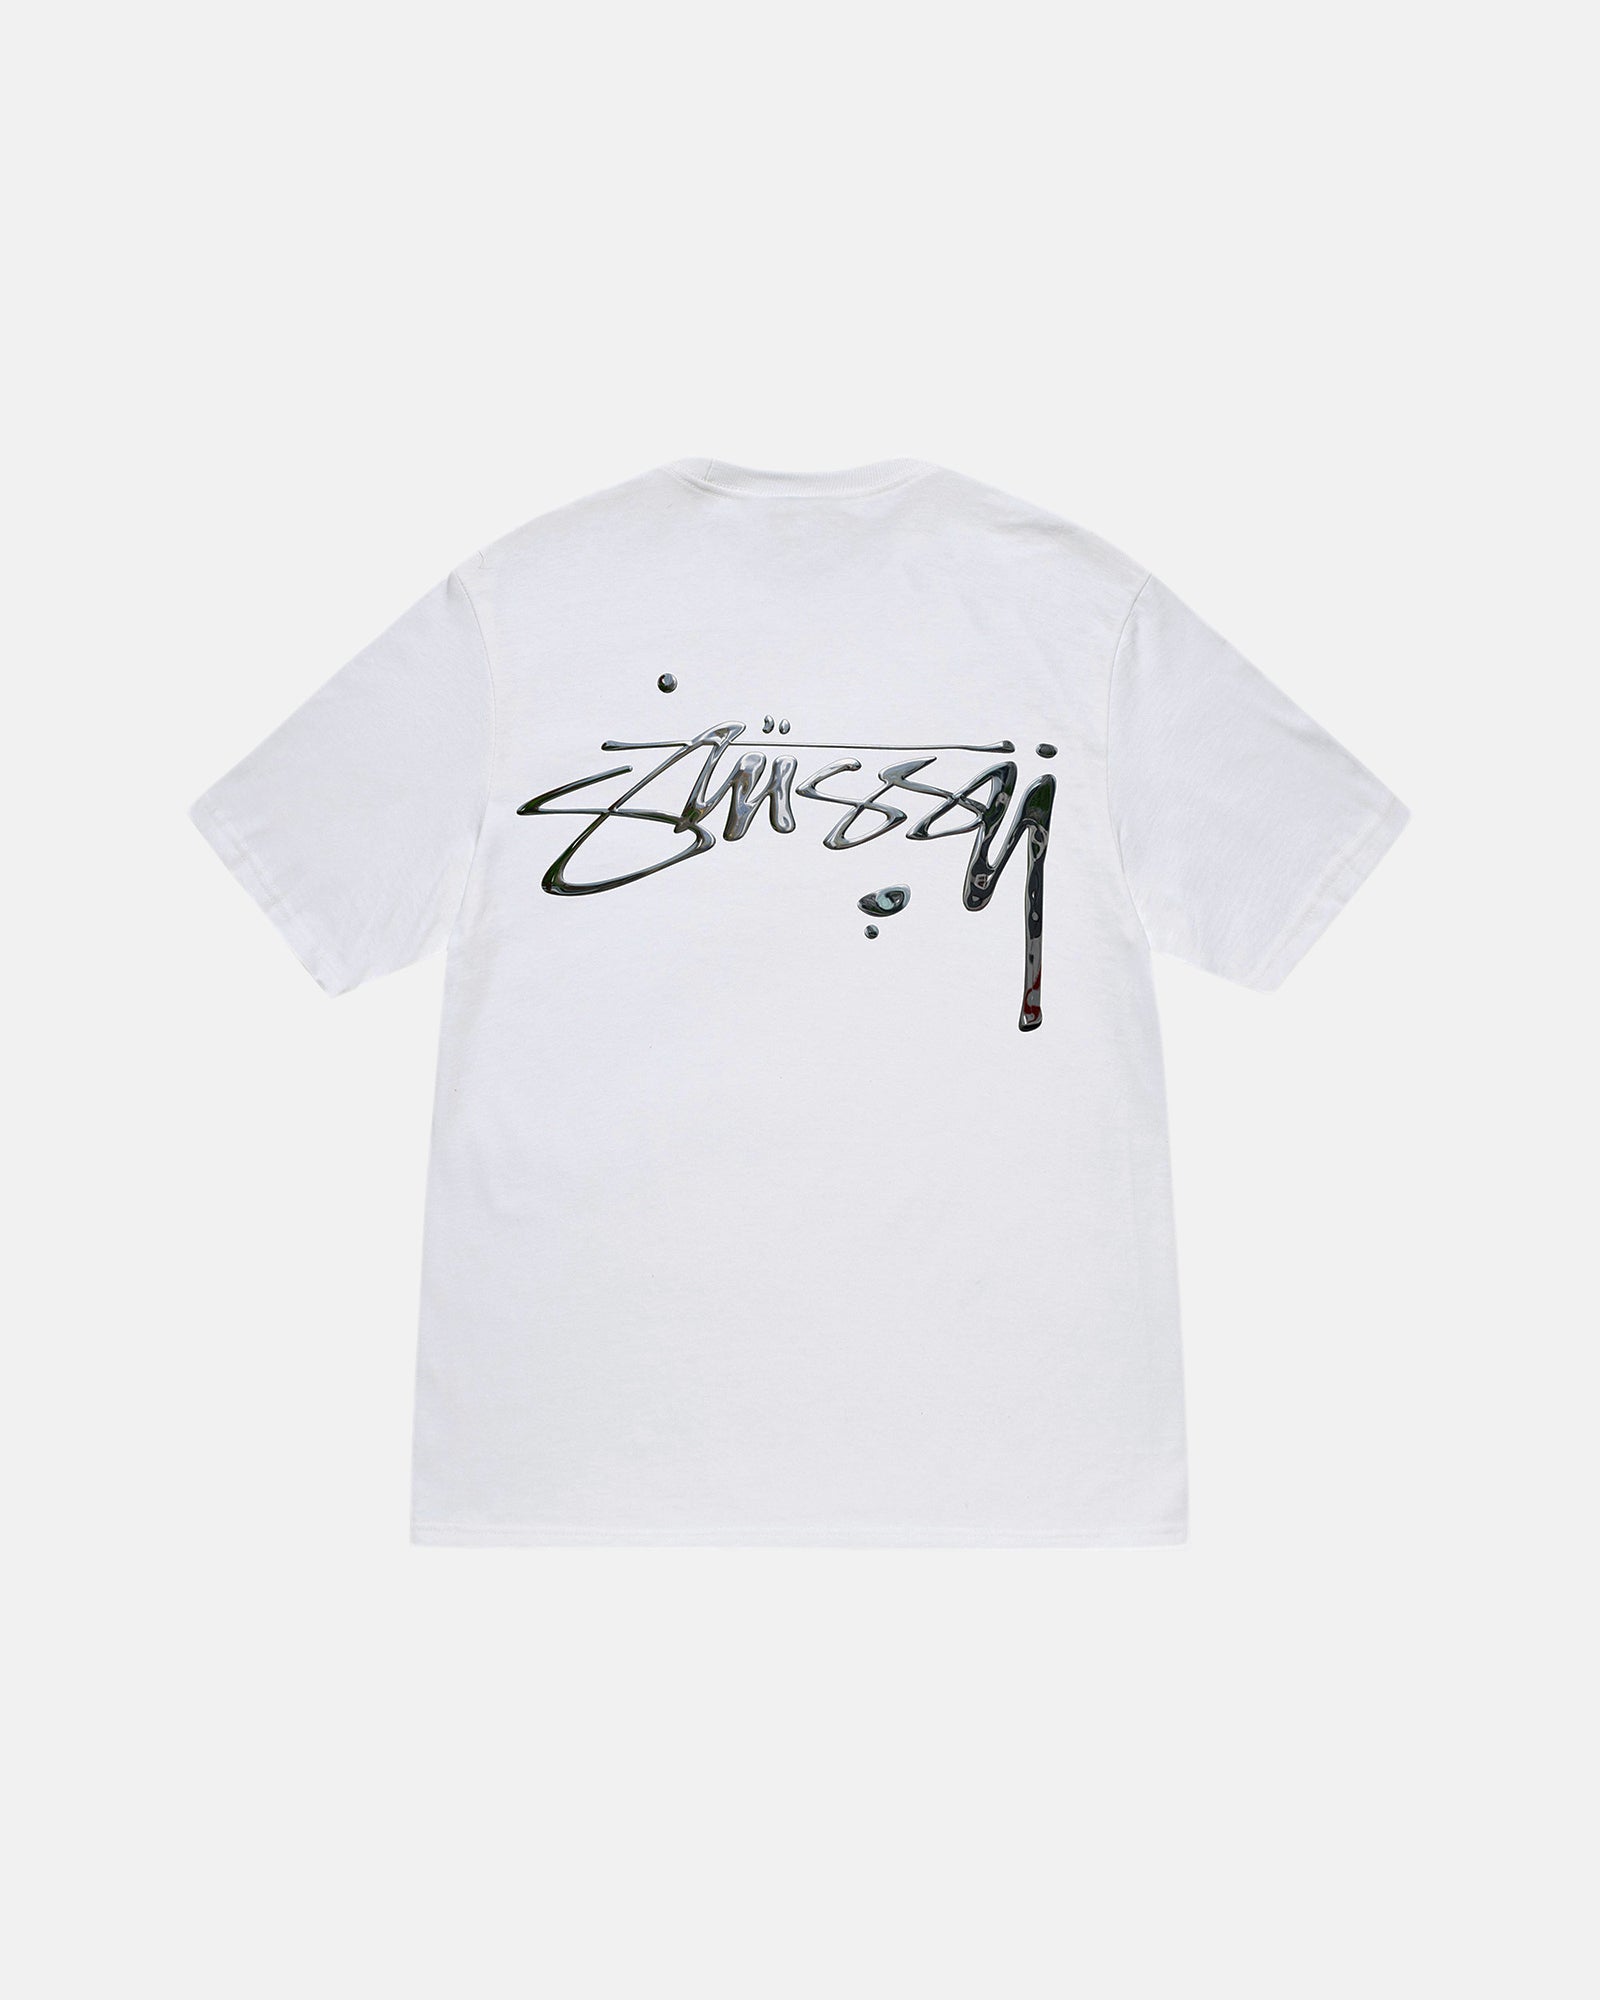 Stussy Monogram No.4 T-Shirt – Thecollectivebycam